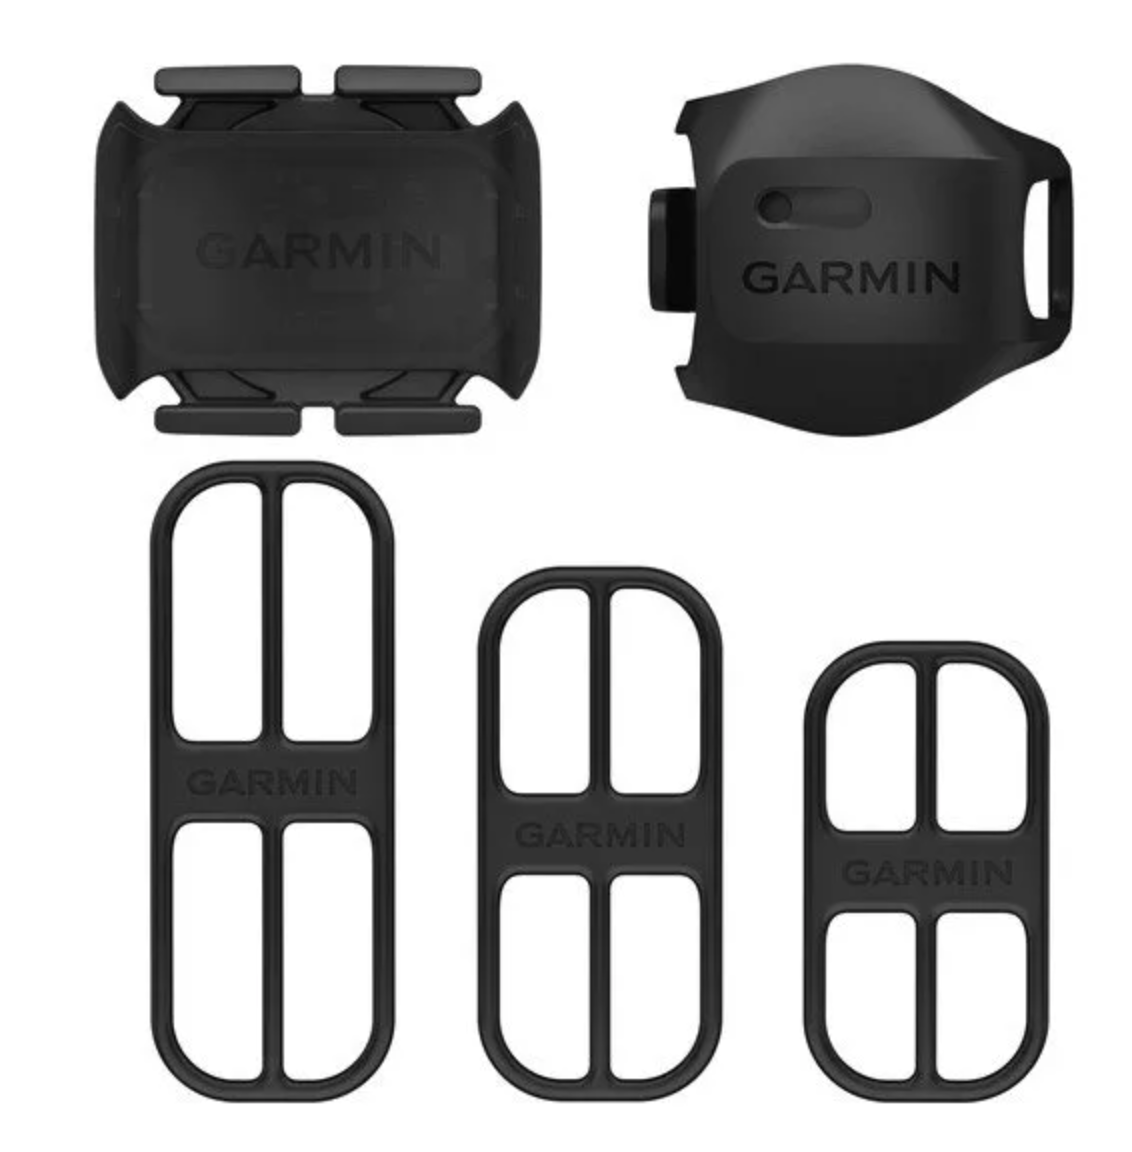 Garmin Speed and cadence sensor version 2